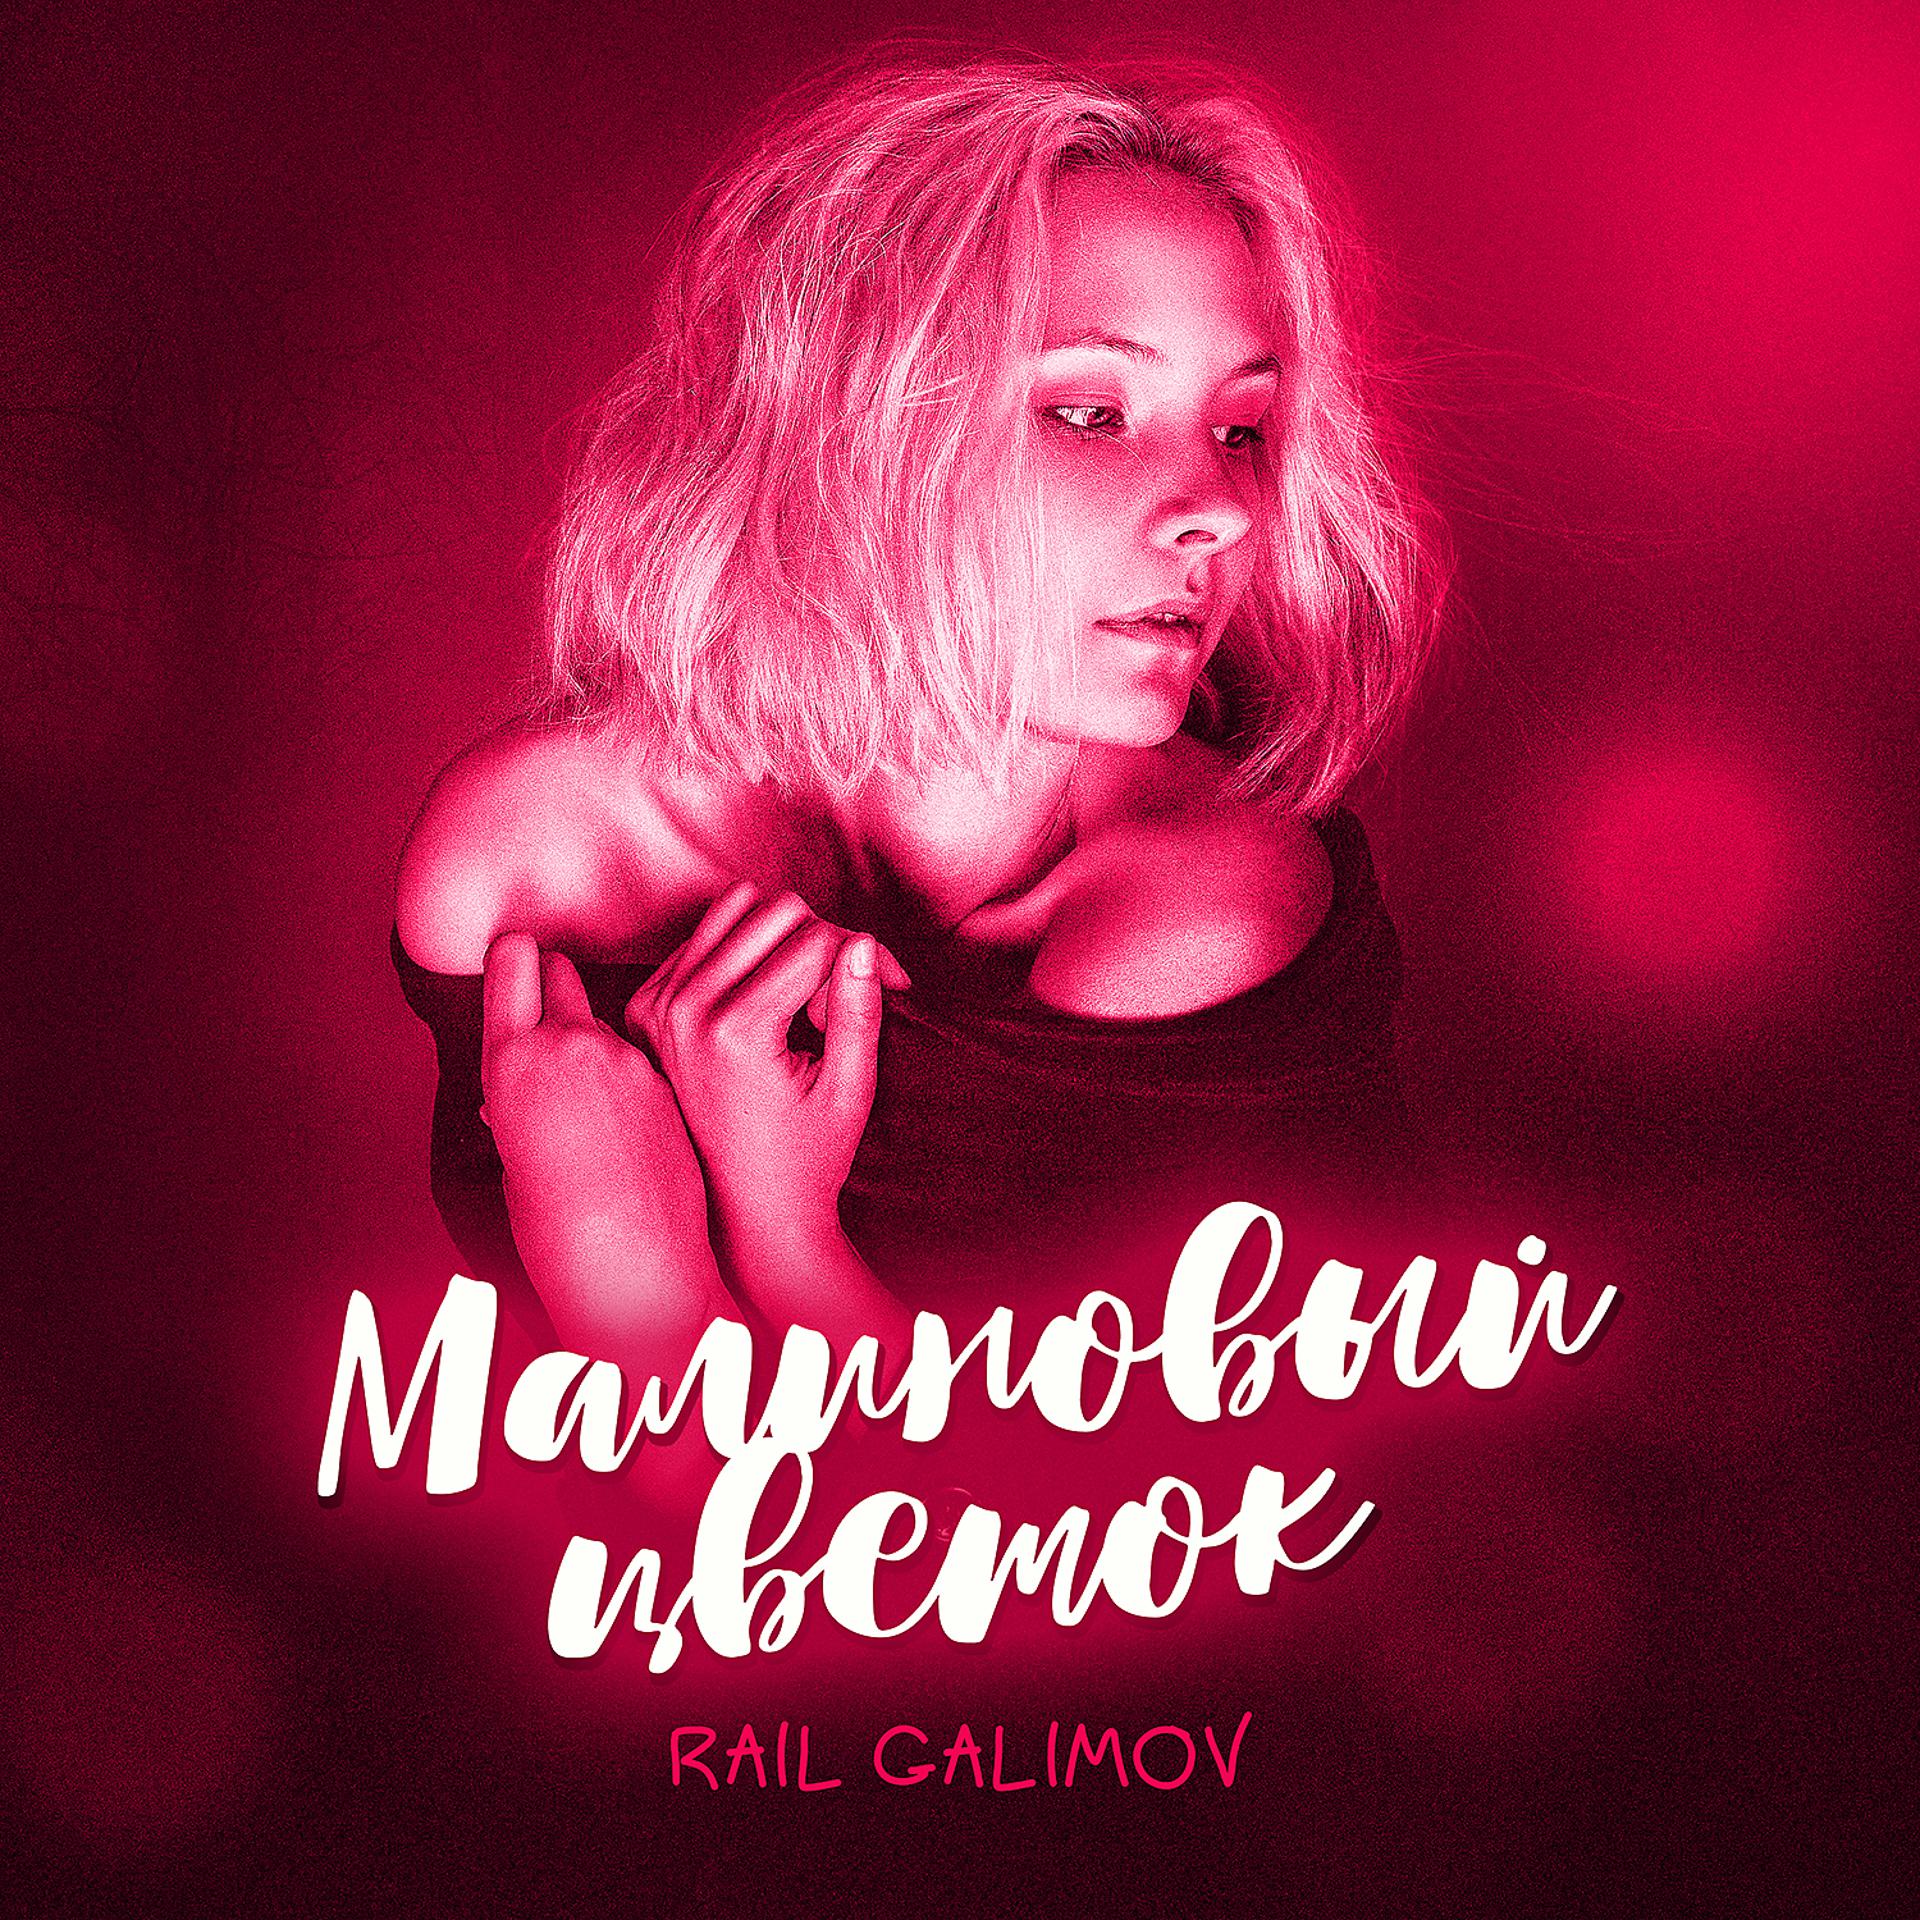 Постер к треку Rail Galimov - Малиновый цветок